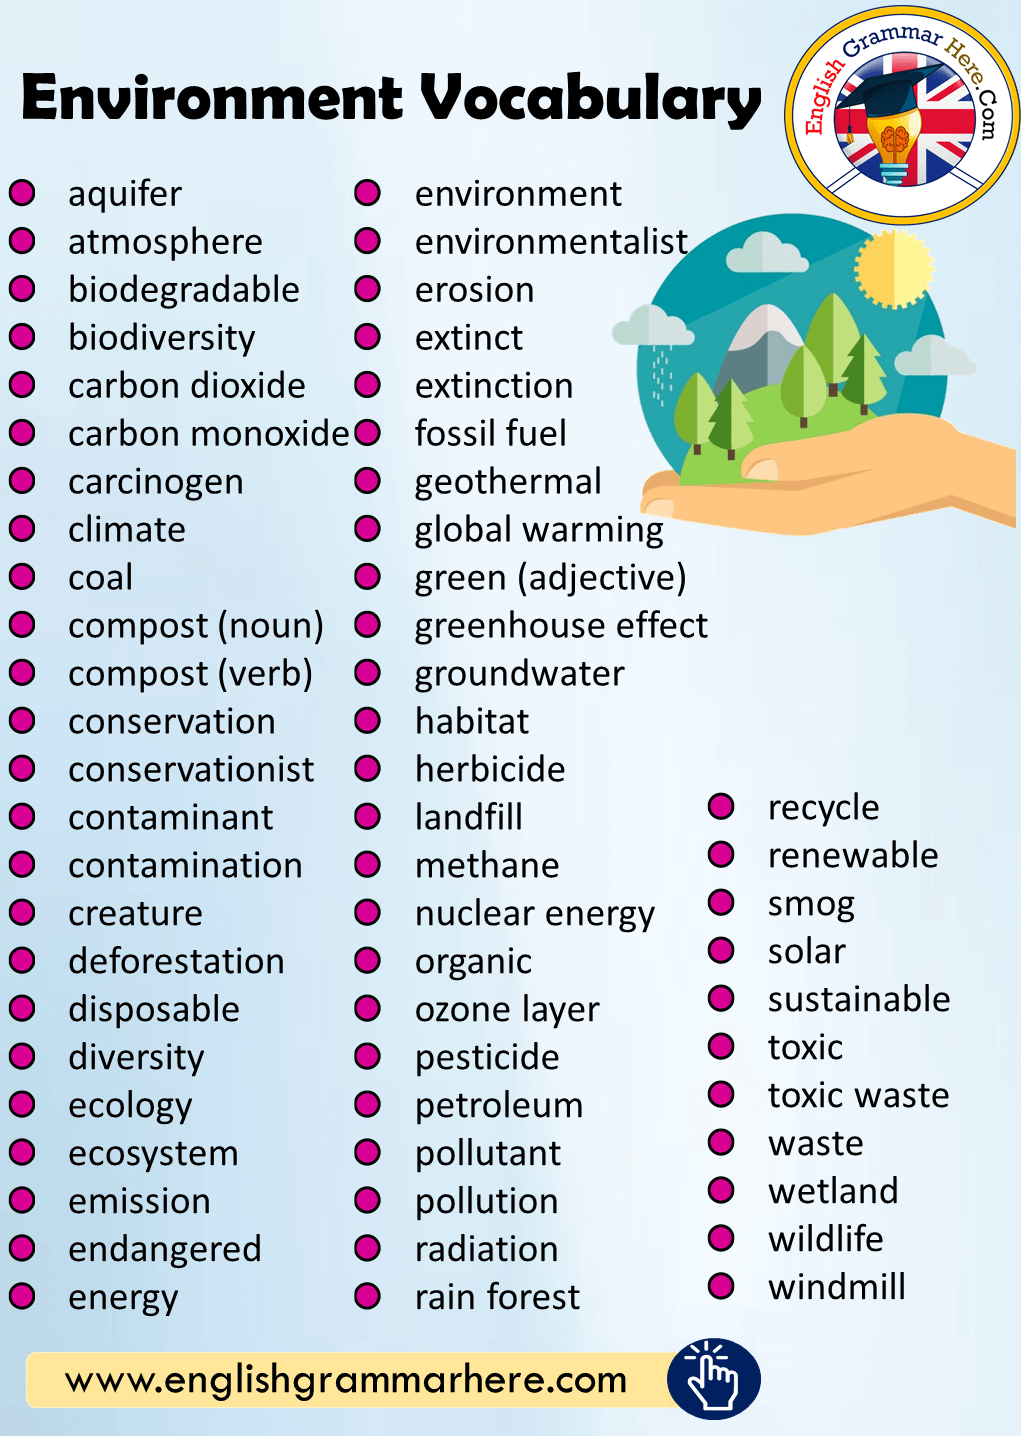 English Enviroment Vocabulary List